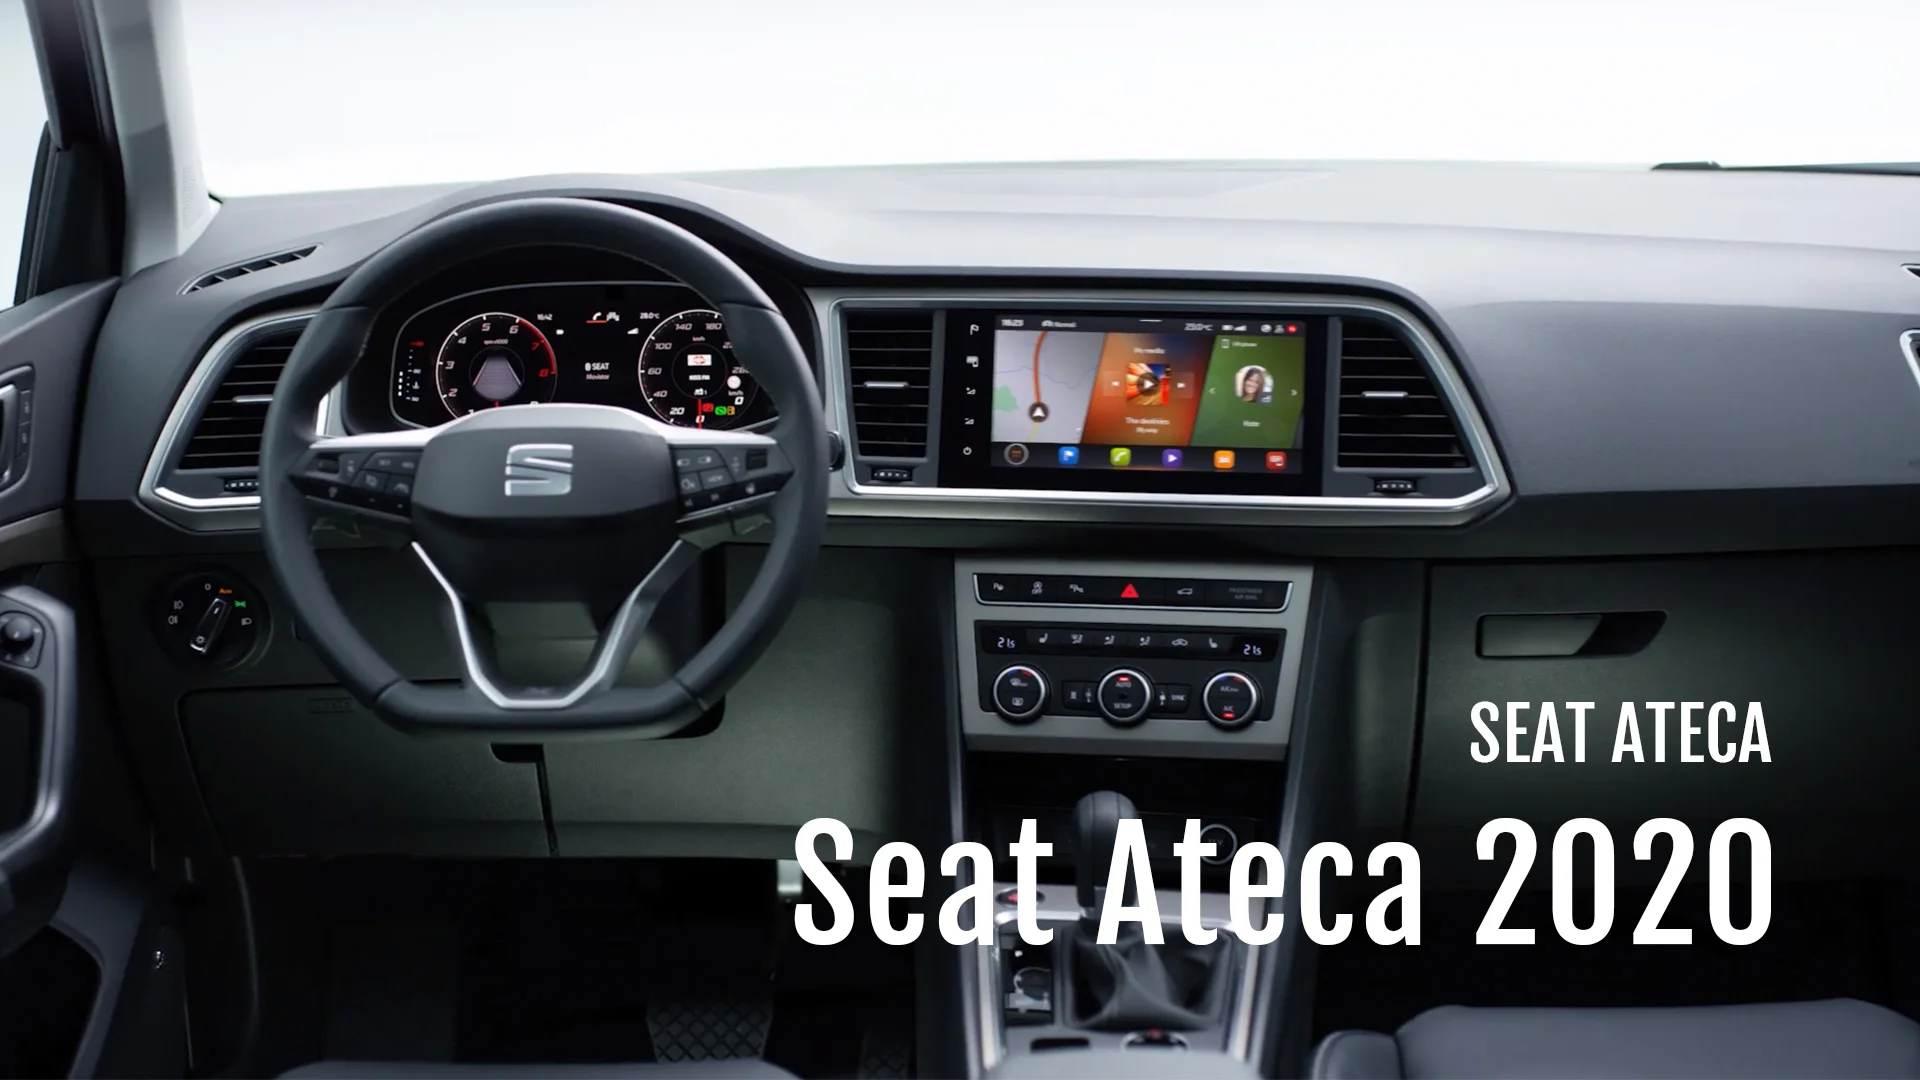 SEAT ATECA 2020 on Vimeo